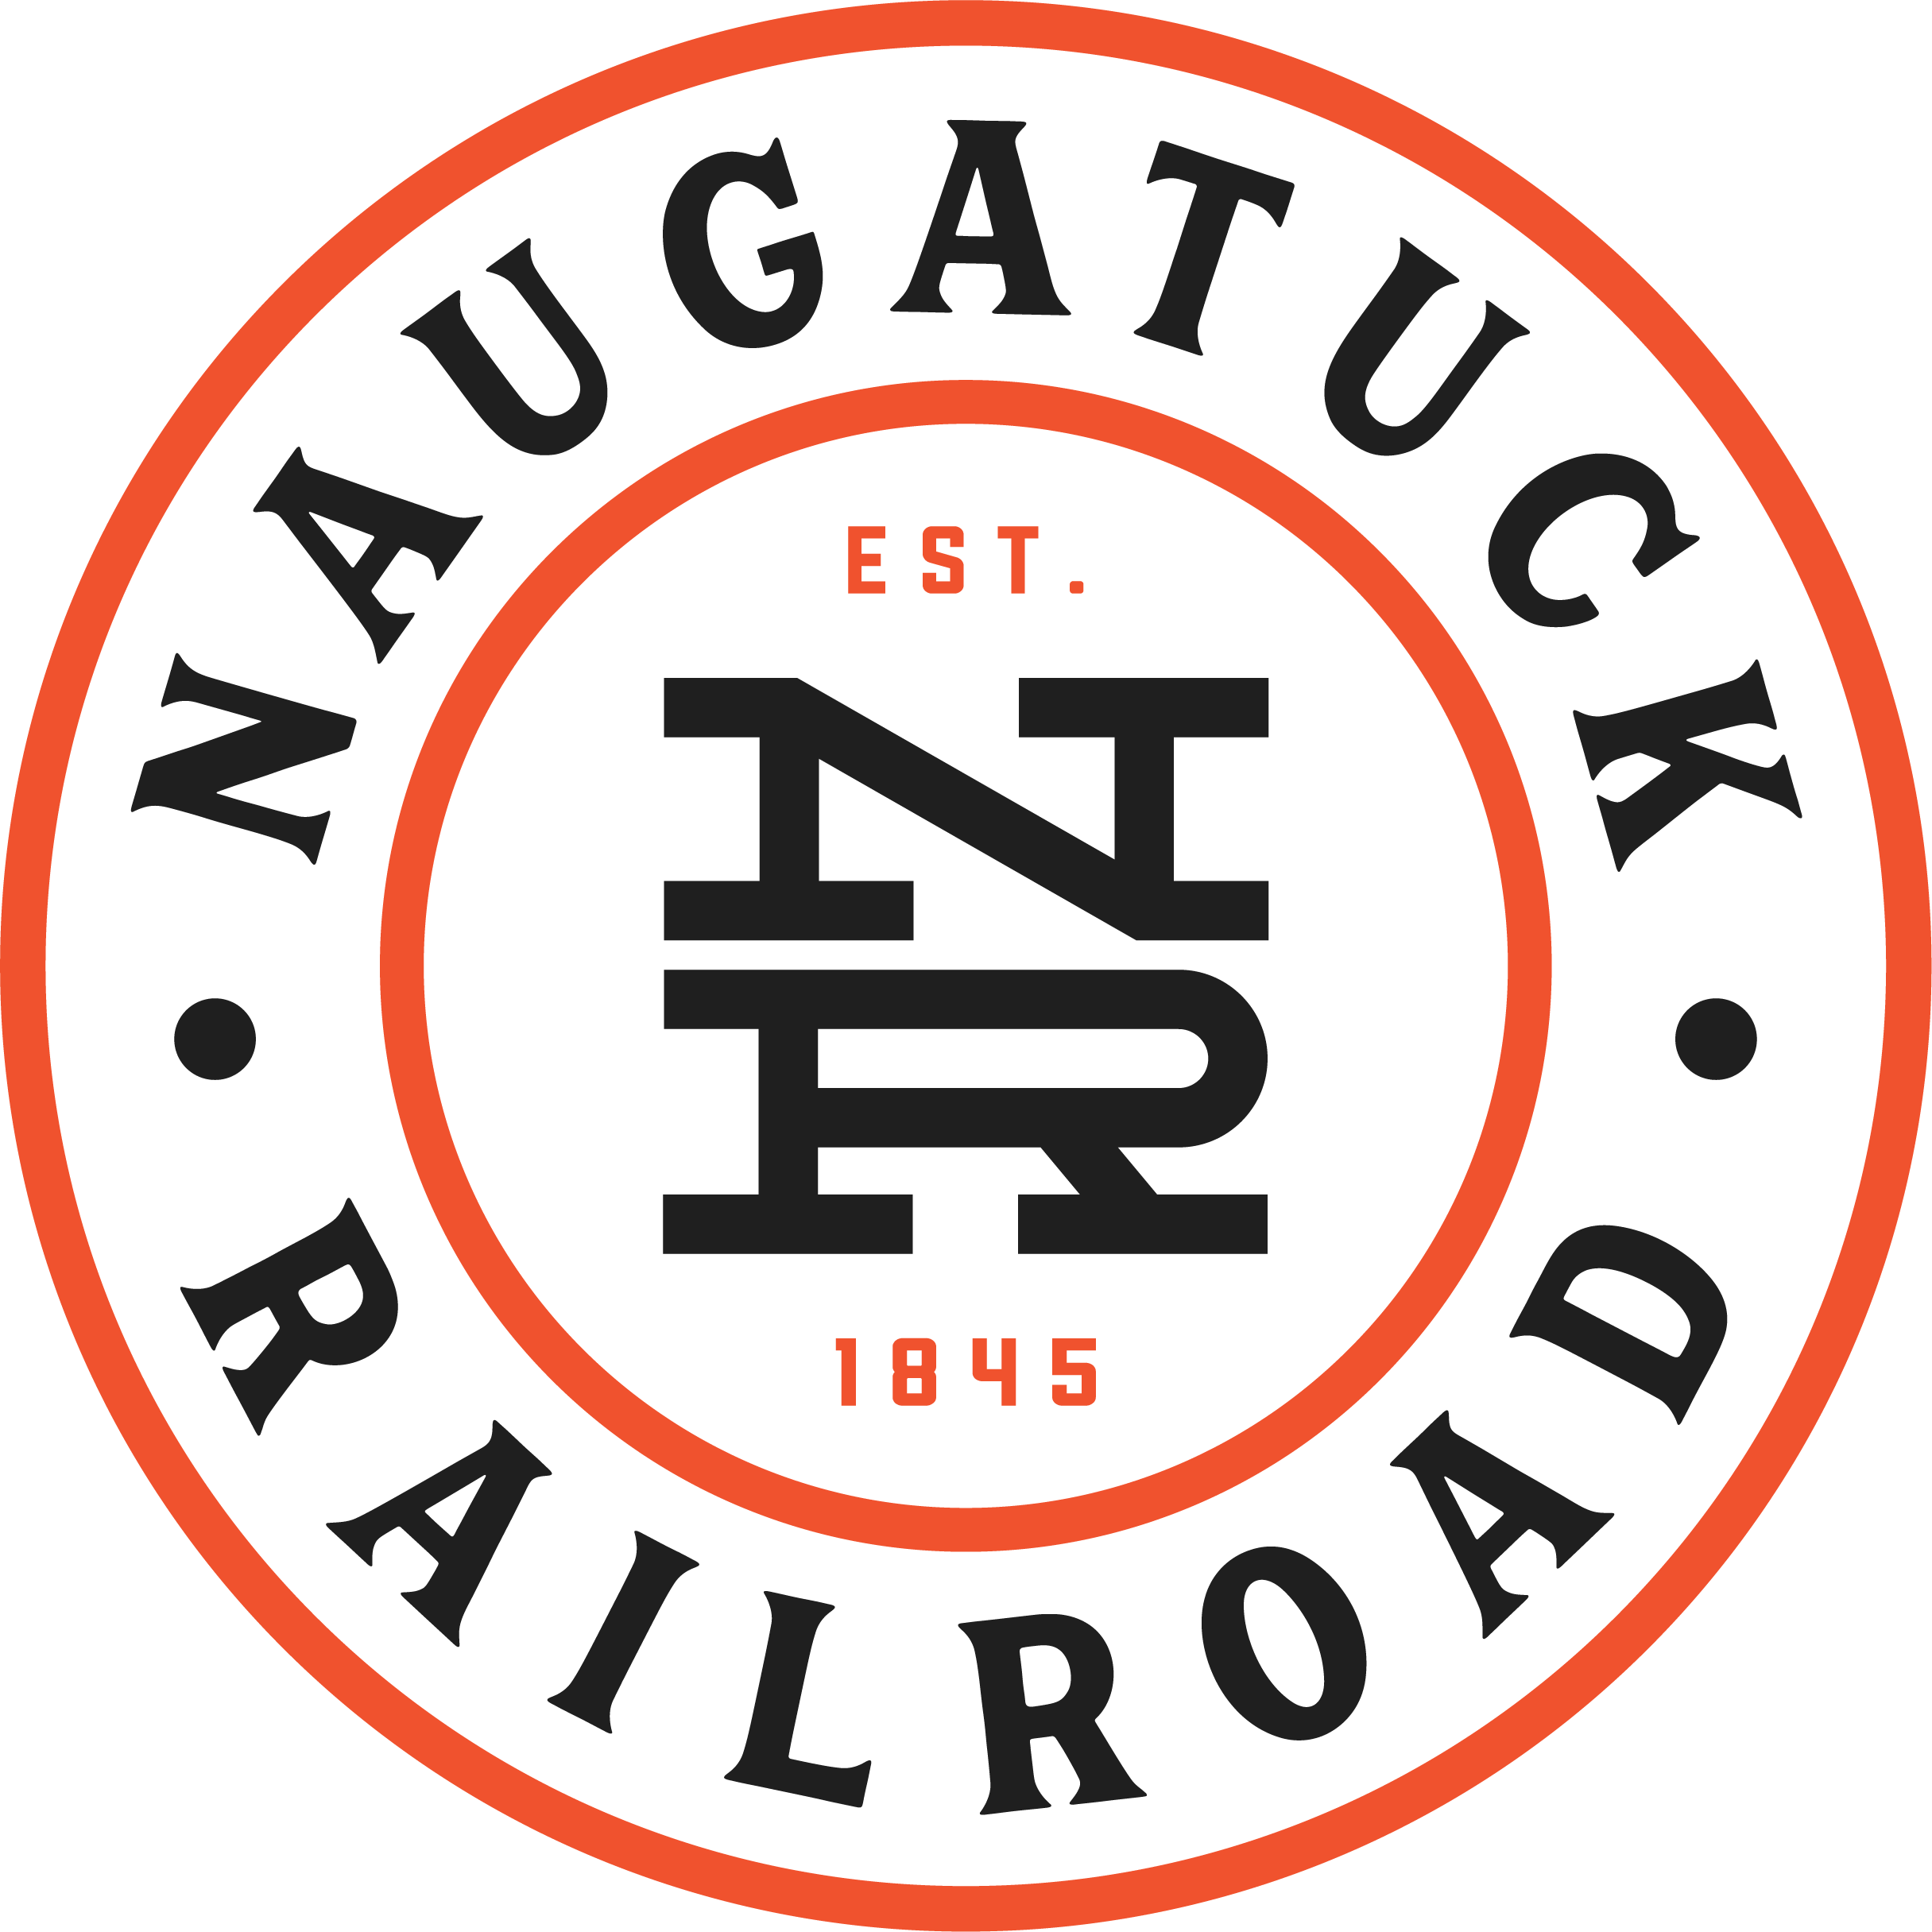 Naugatuck Railroad